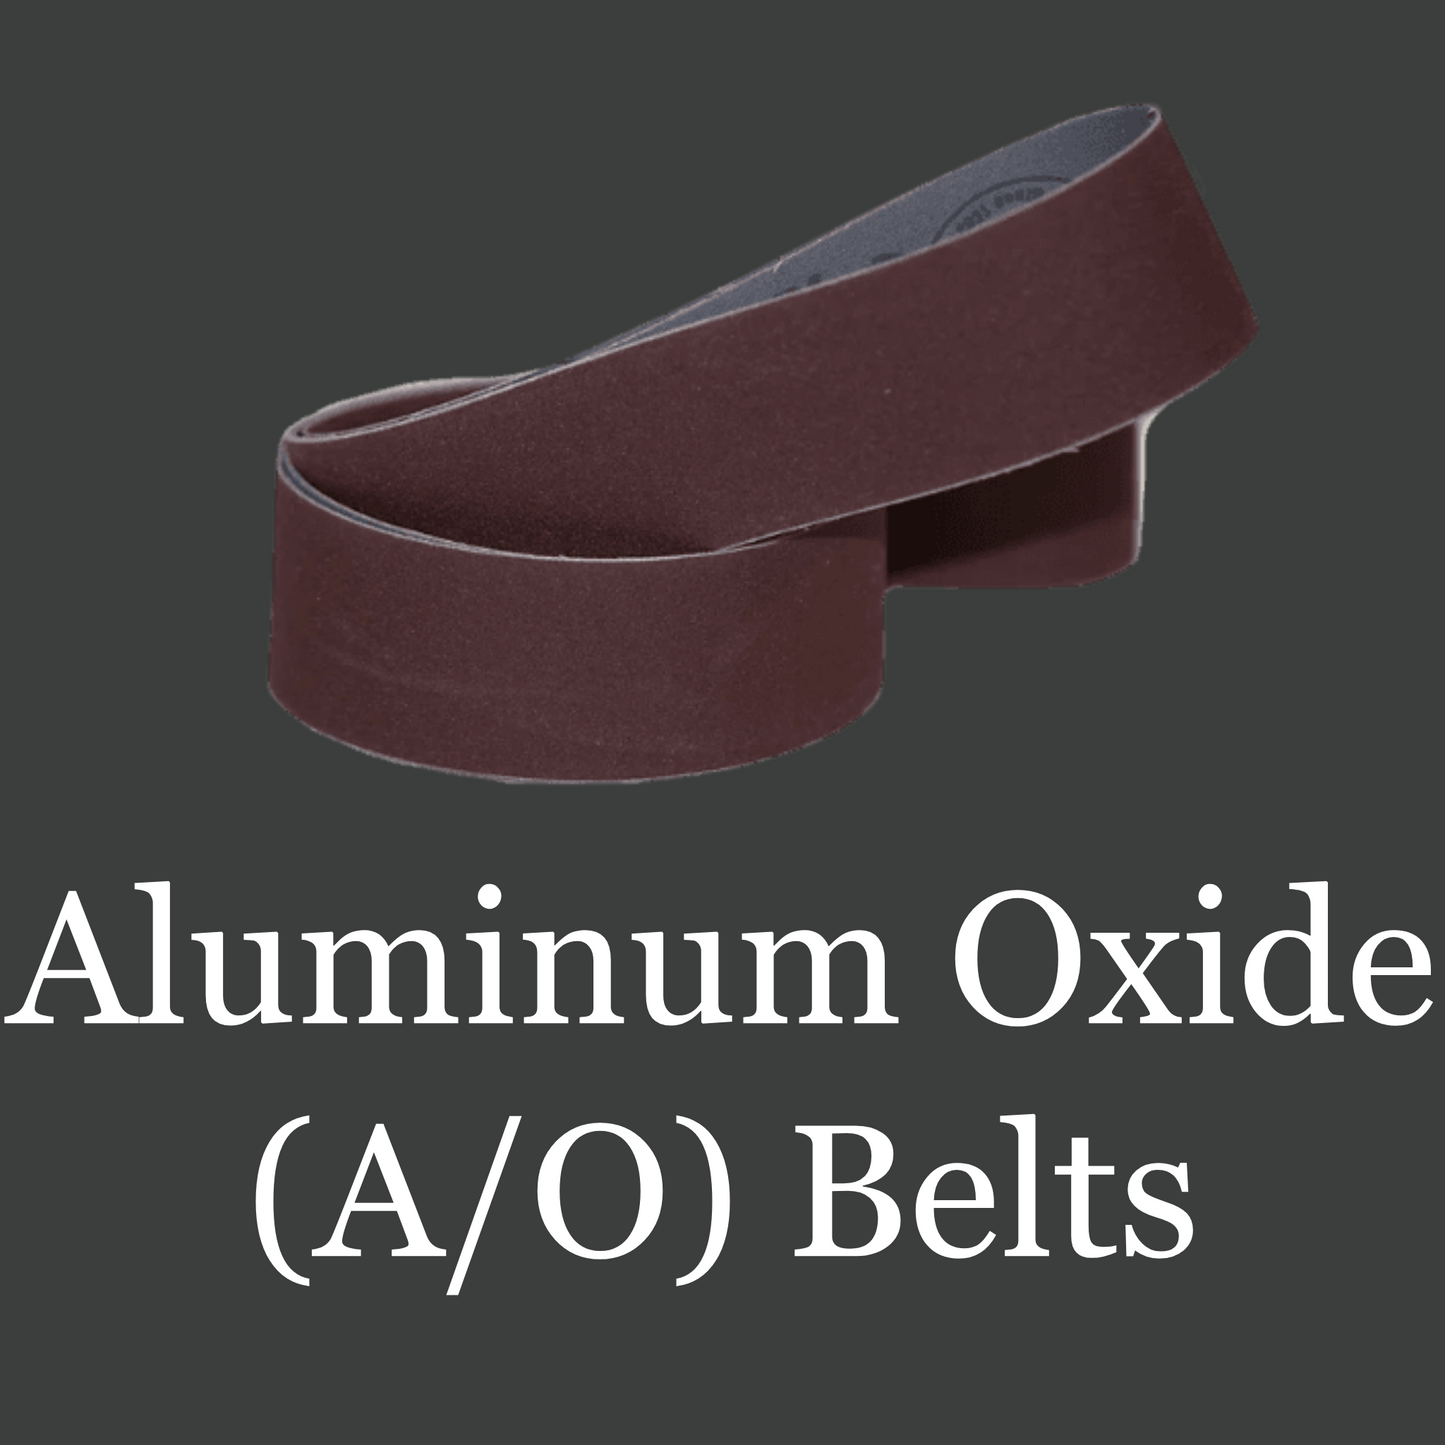 Aluminum Oxide 1” x 30” X Belt